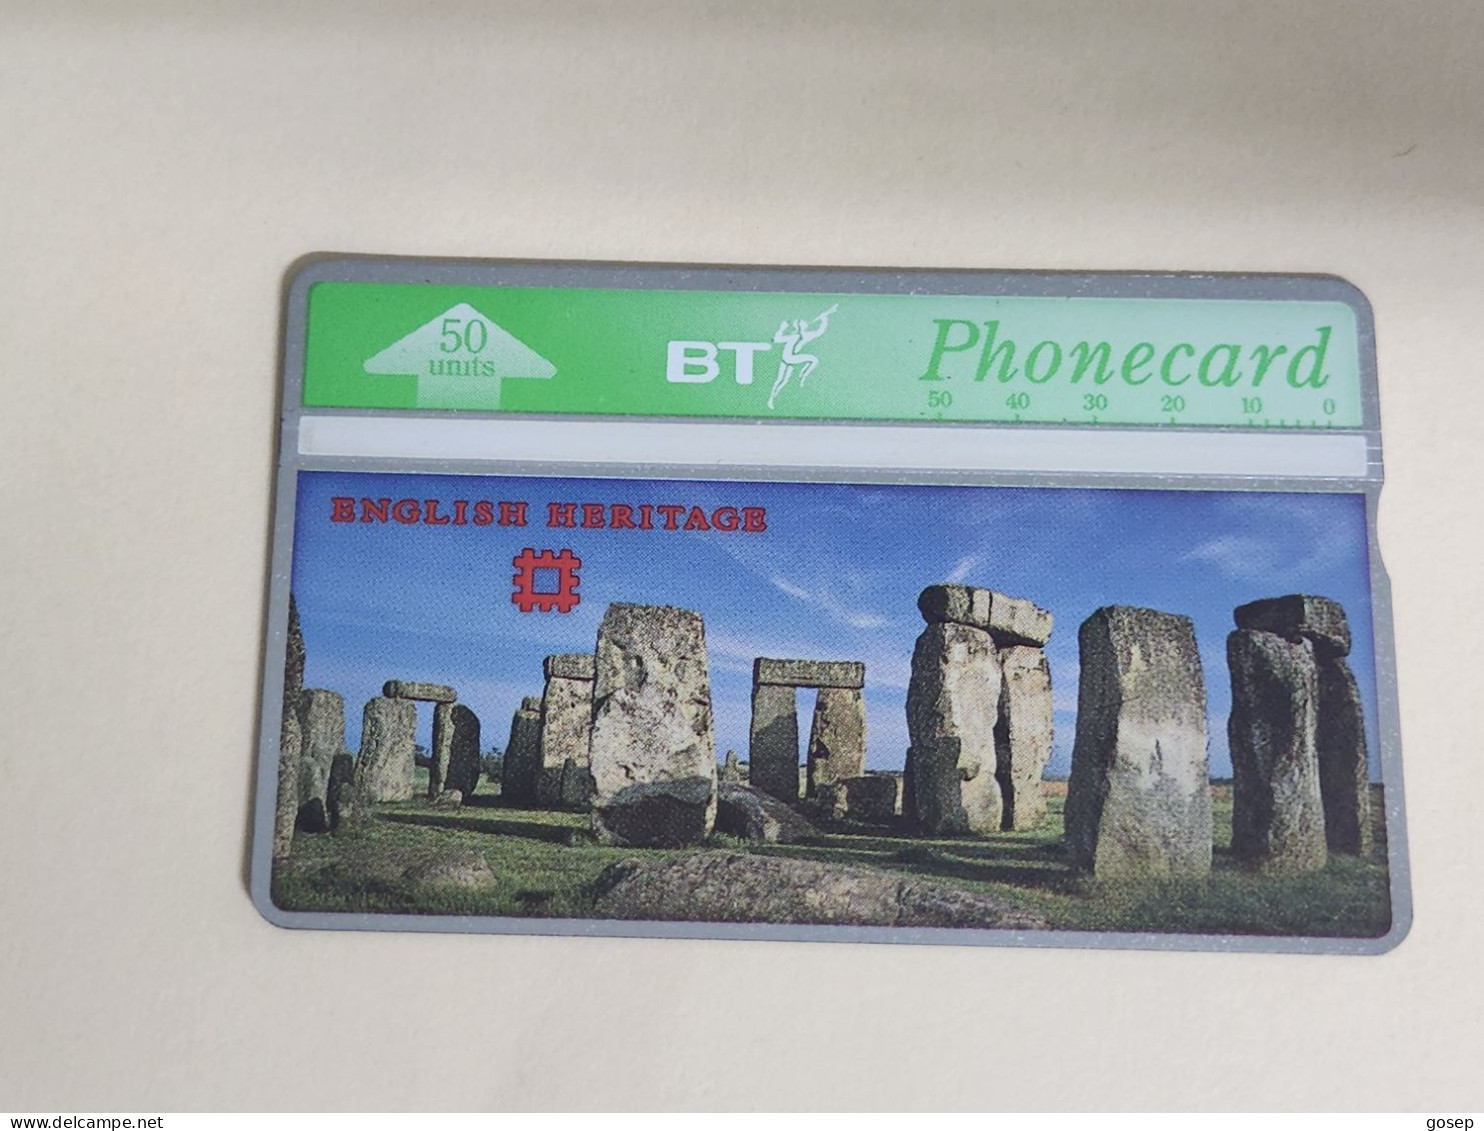 United Kingdom-(BTA110)-HERITAGE-stonehenge-(187)(50units)(508E91783)price Cataloge8.00£-mint+1card Prepiad Free - BT Emissions Publicitaires